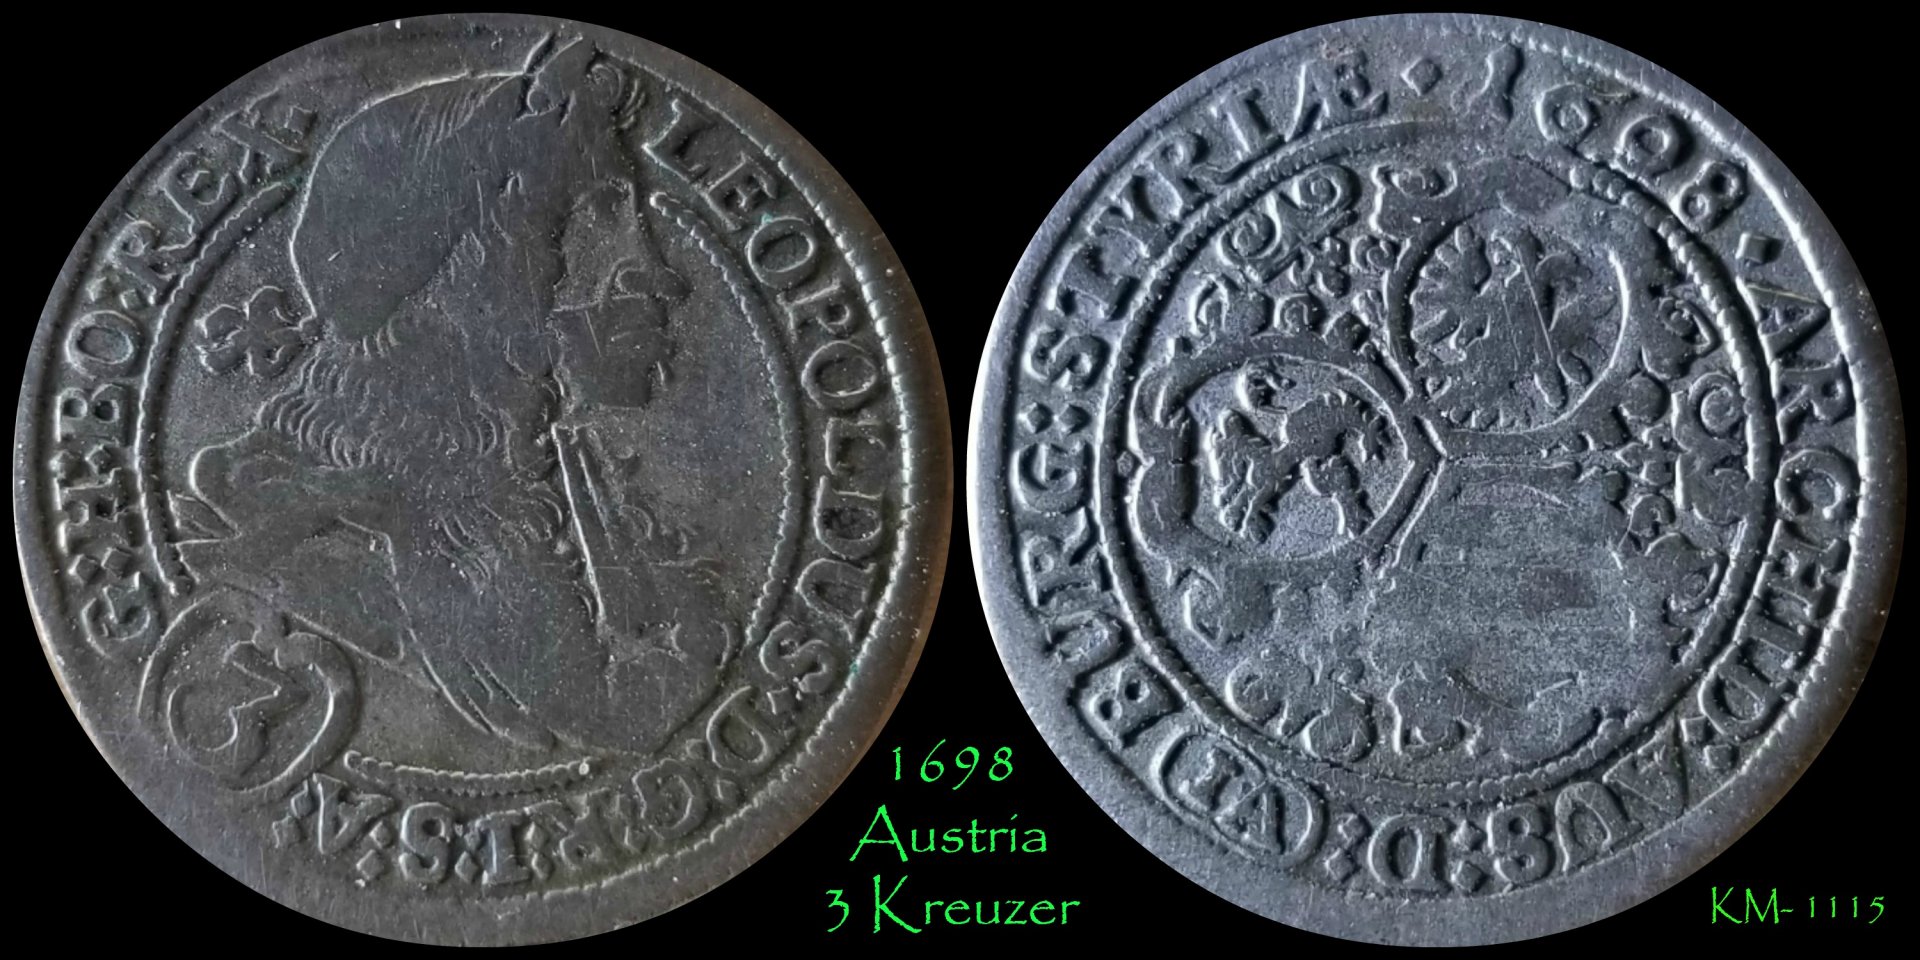 1698 Austria 3 Kr ia.jpg